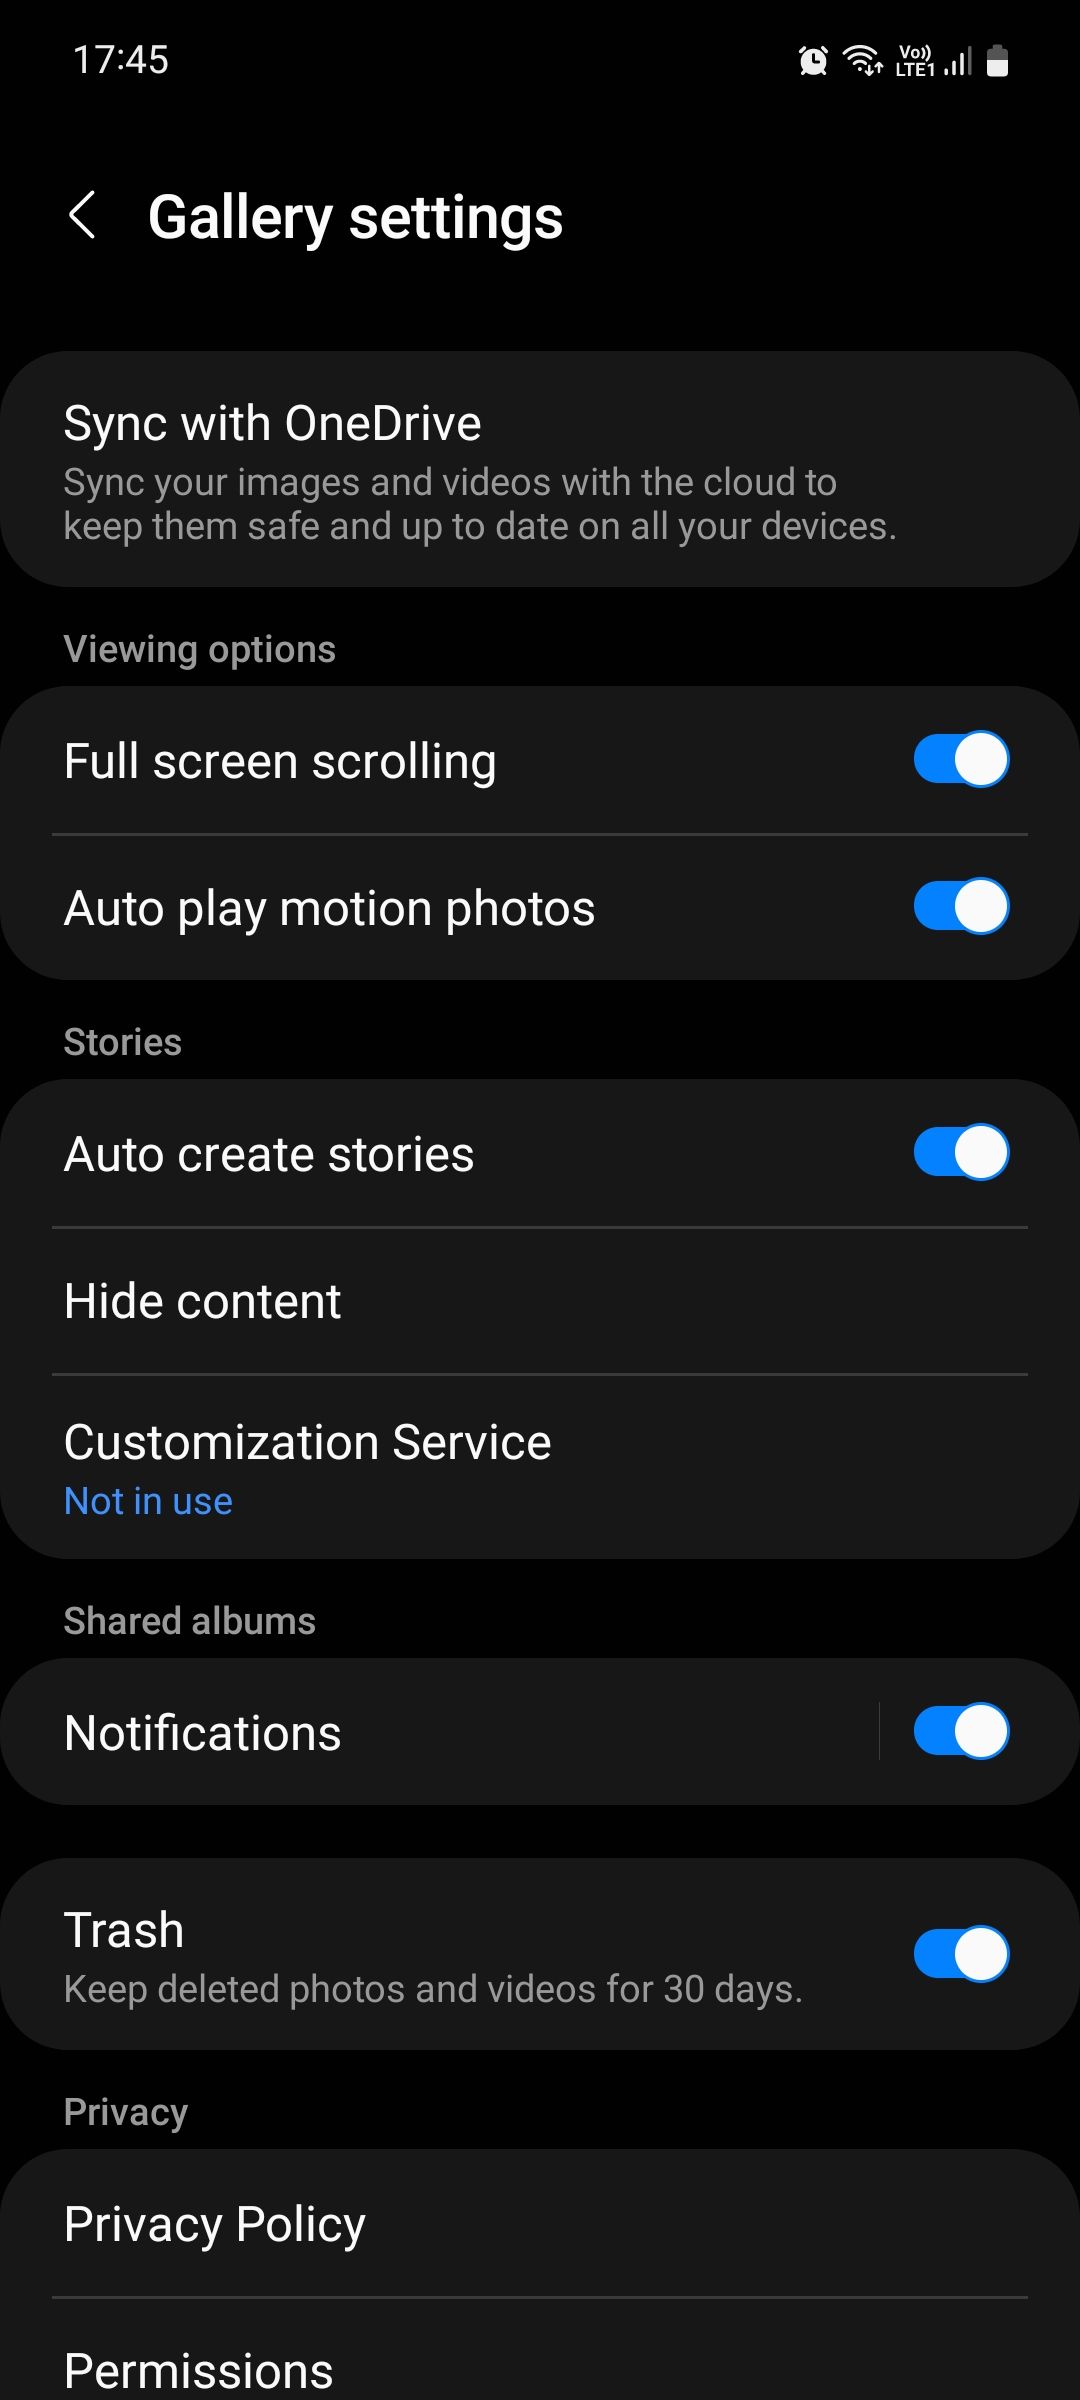 Samsung Gallery settings